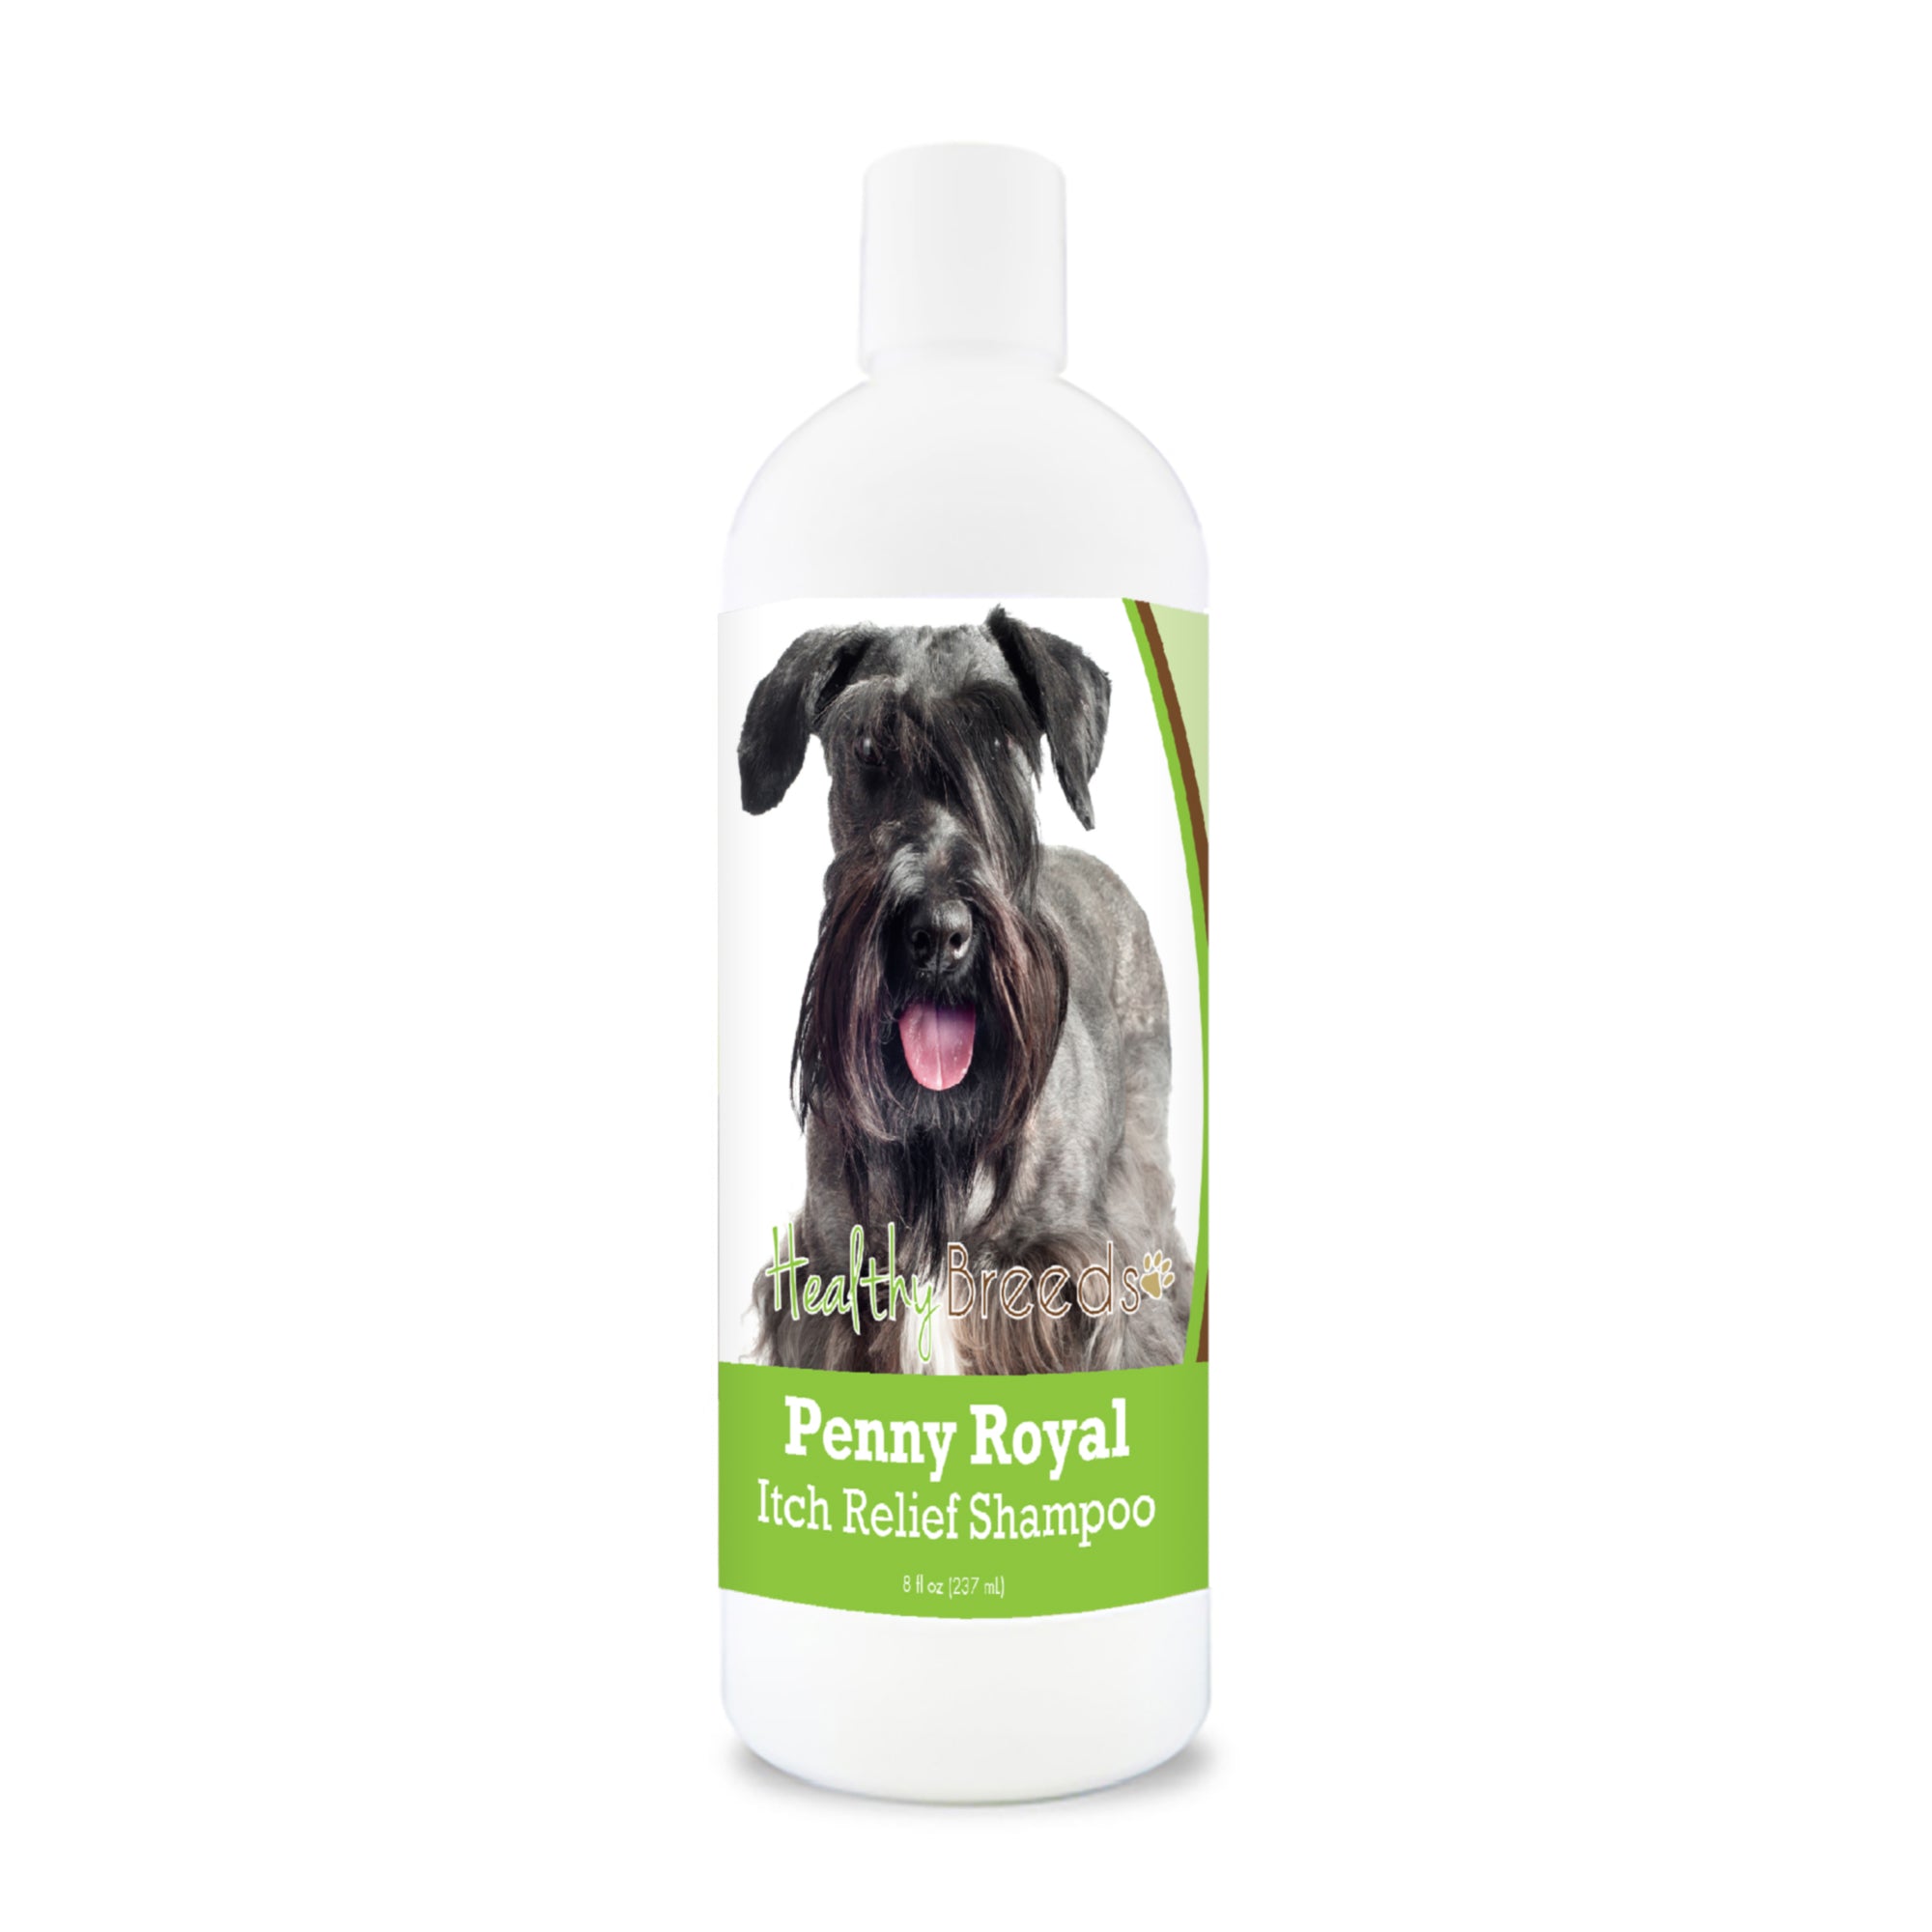 Cesky Terrier Penny Royal Itch Relief Shampoo 8 oz